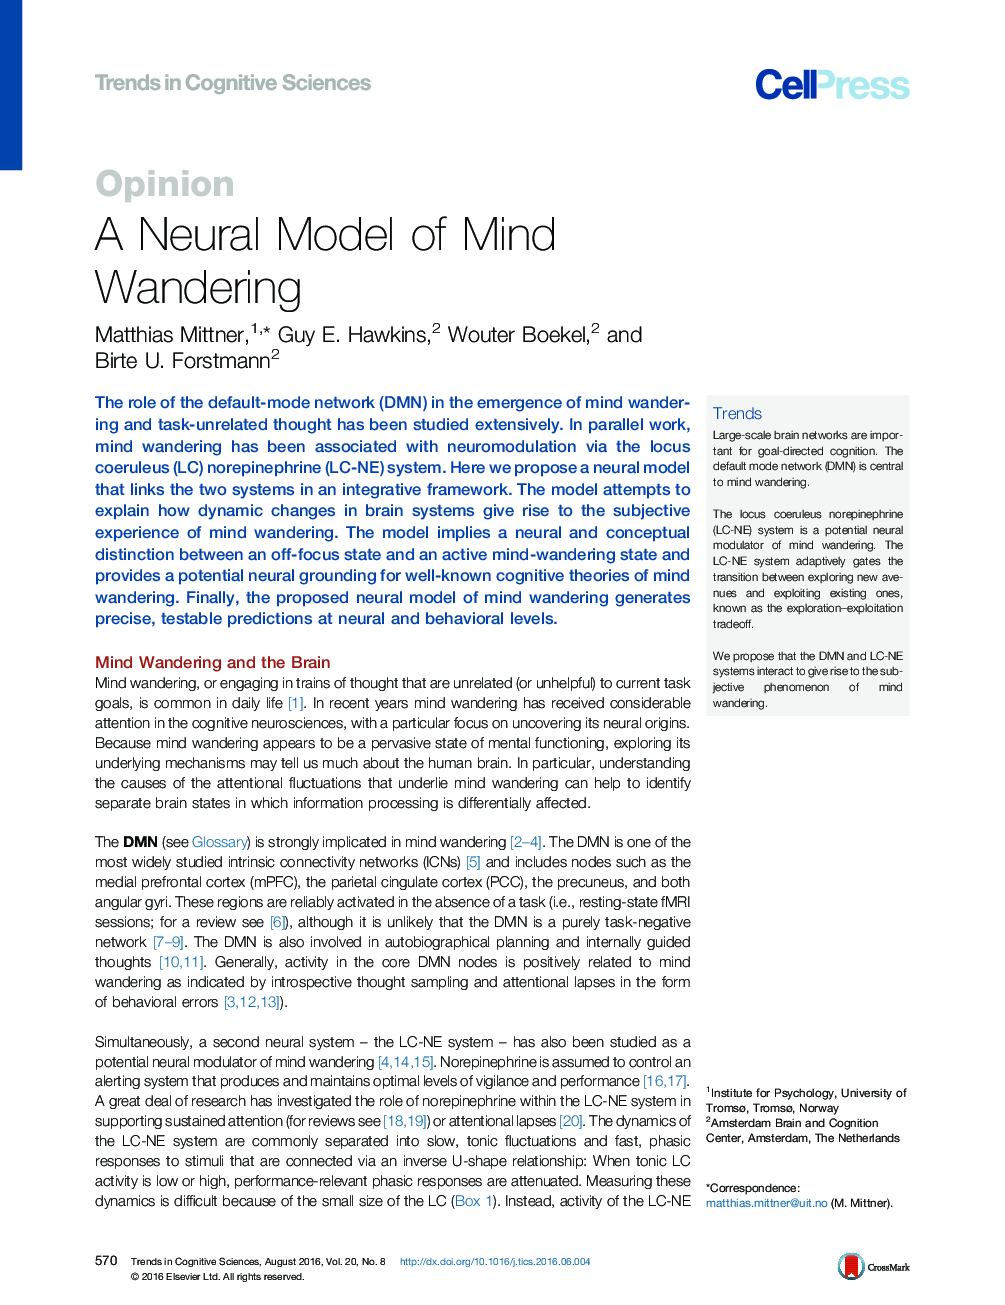 مدل عصبی سرگردانی ذهن 